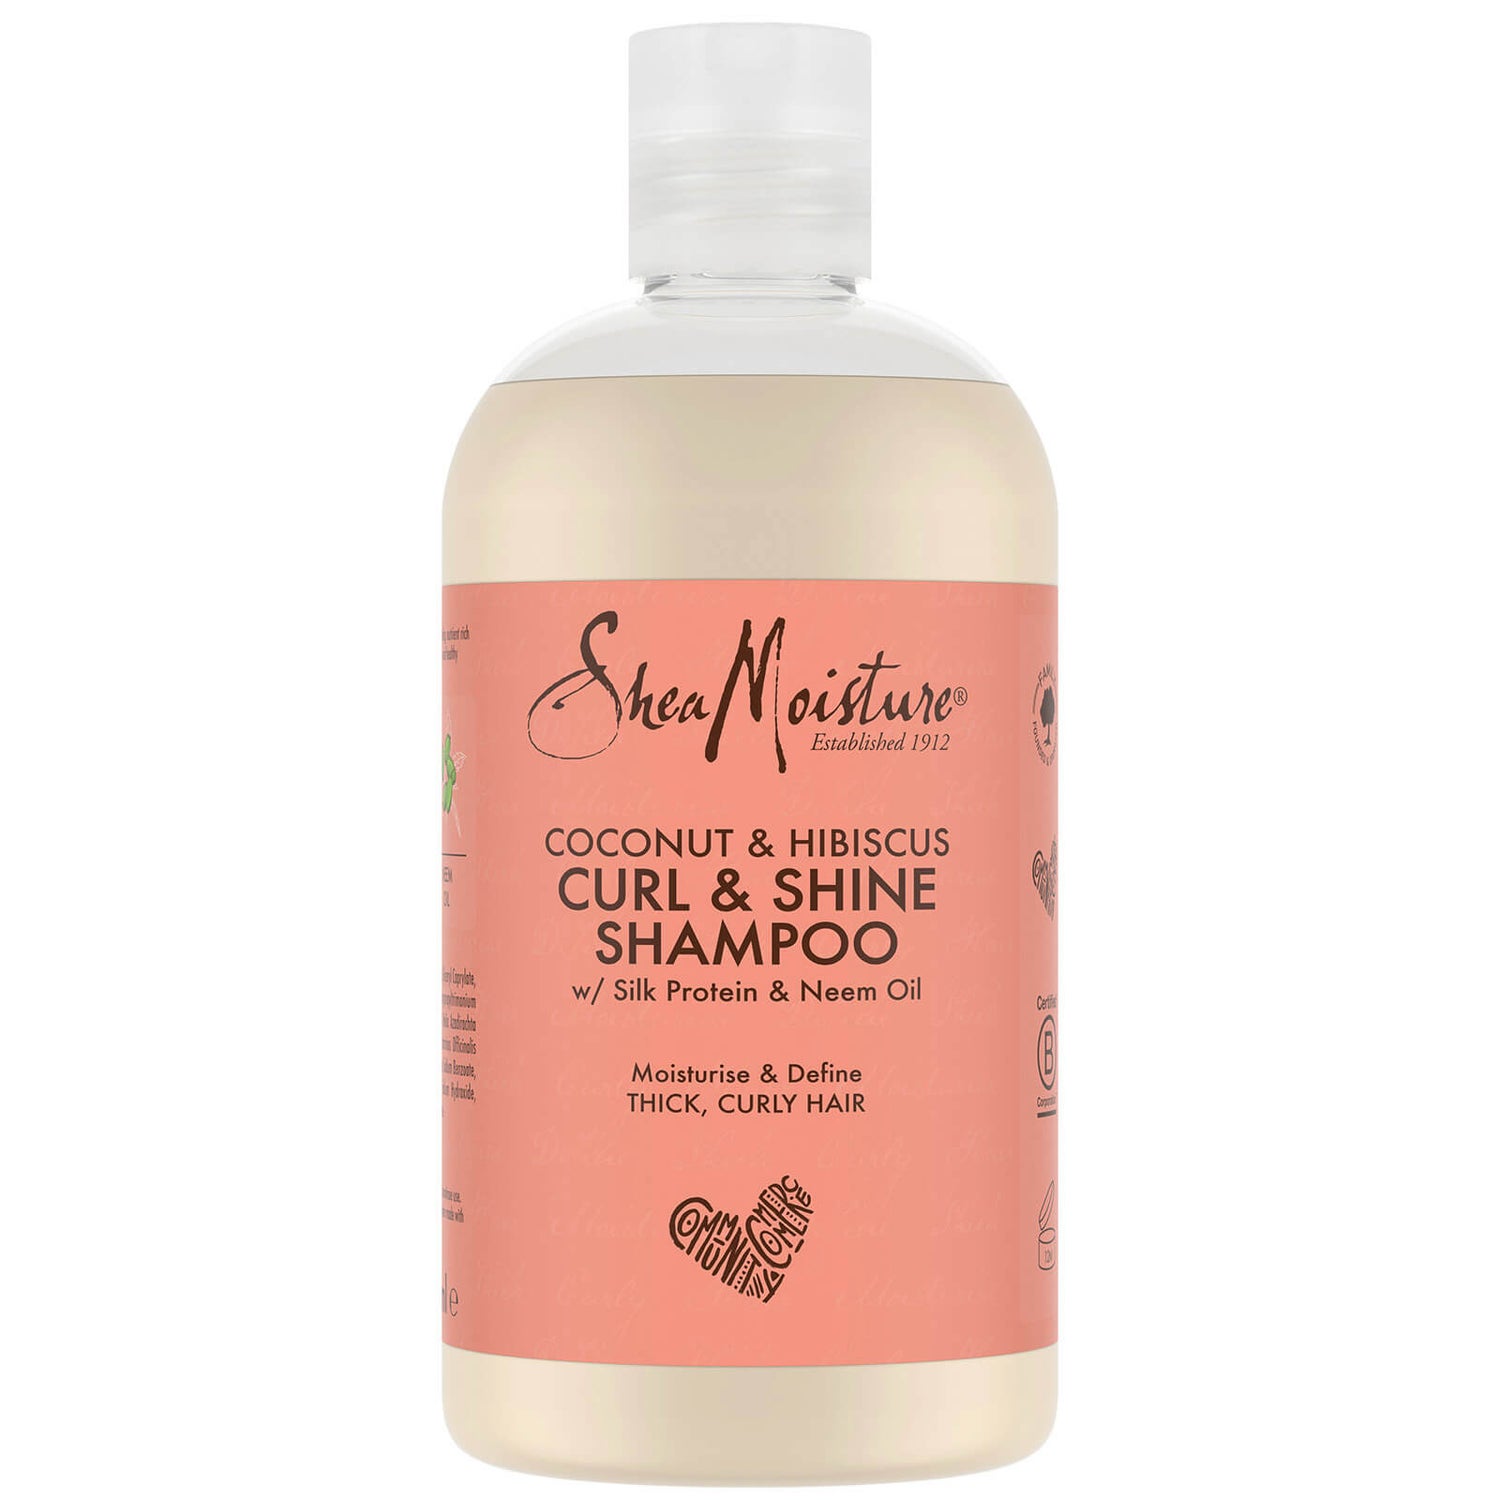 Shampoo de Coco e Hibisco Curl & Shine da Shea Moisture 379 ml